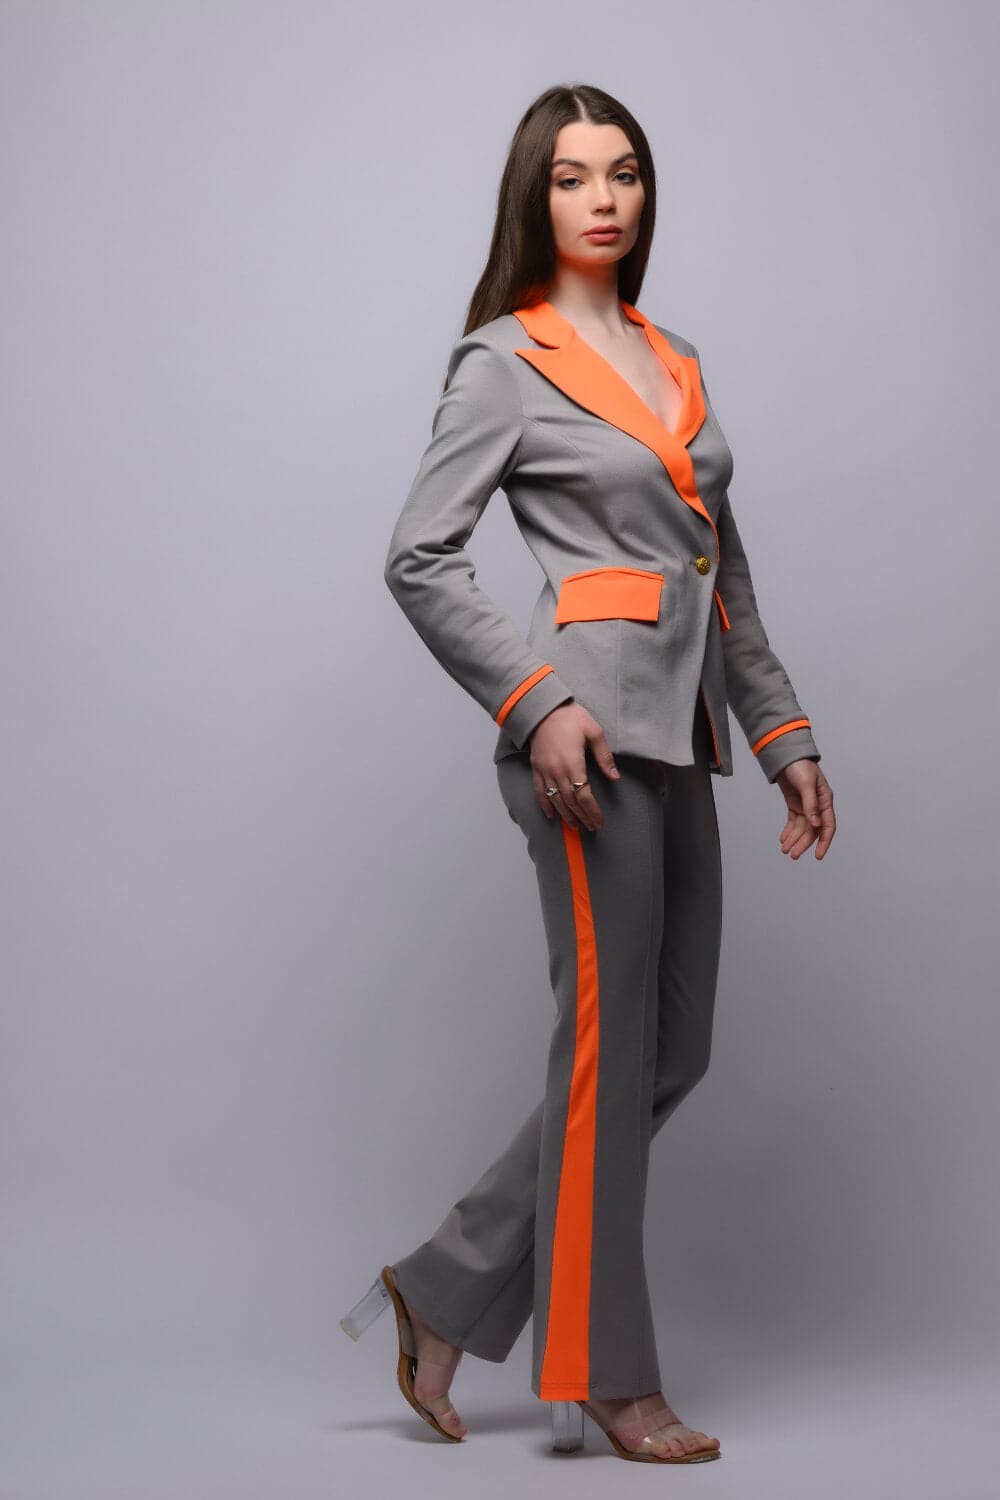 Nikkimorange - Orange Neon Blazer Set